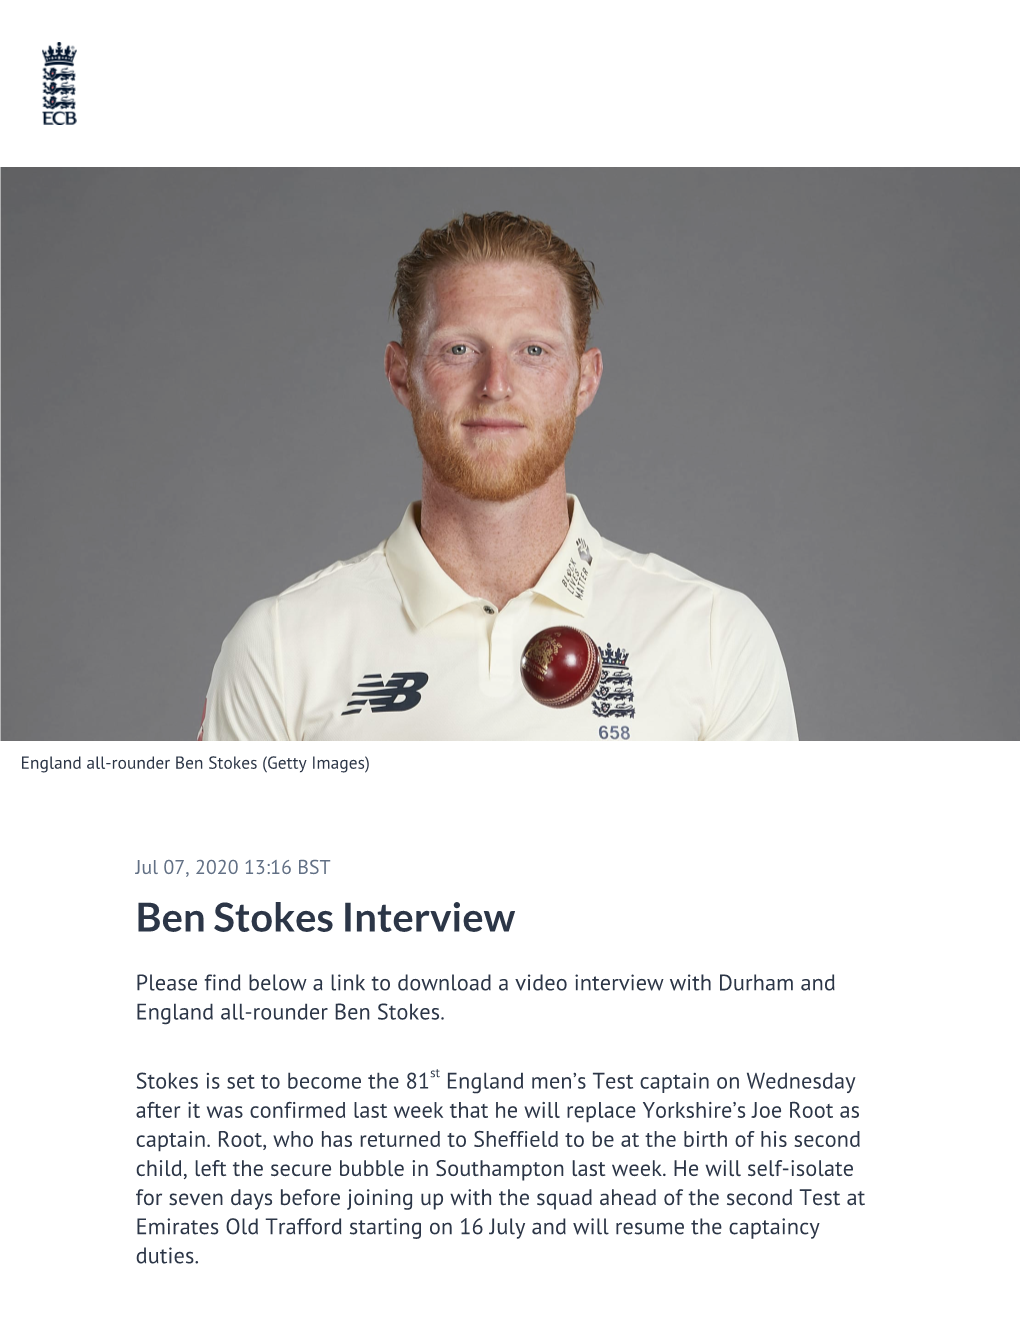 Ben Stokes Interview